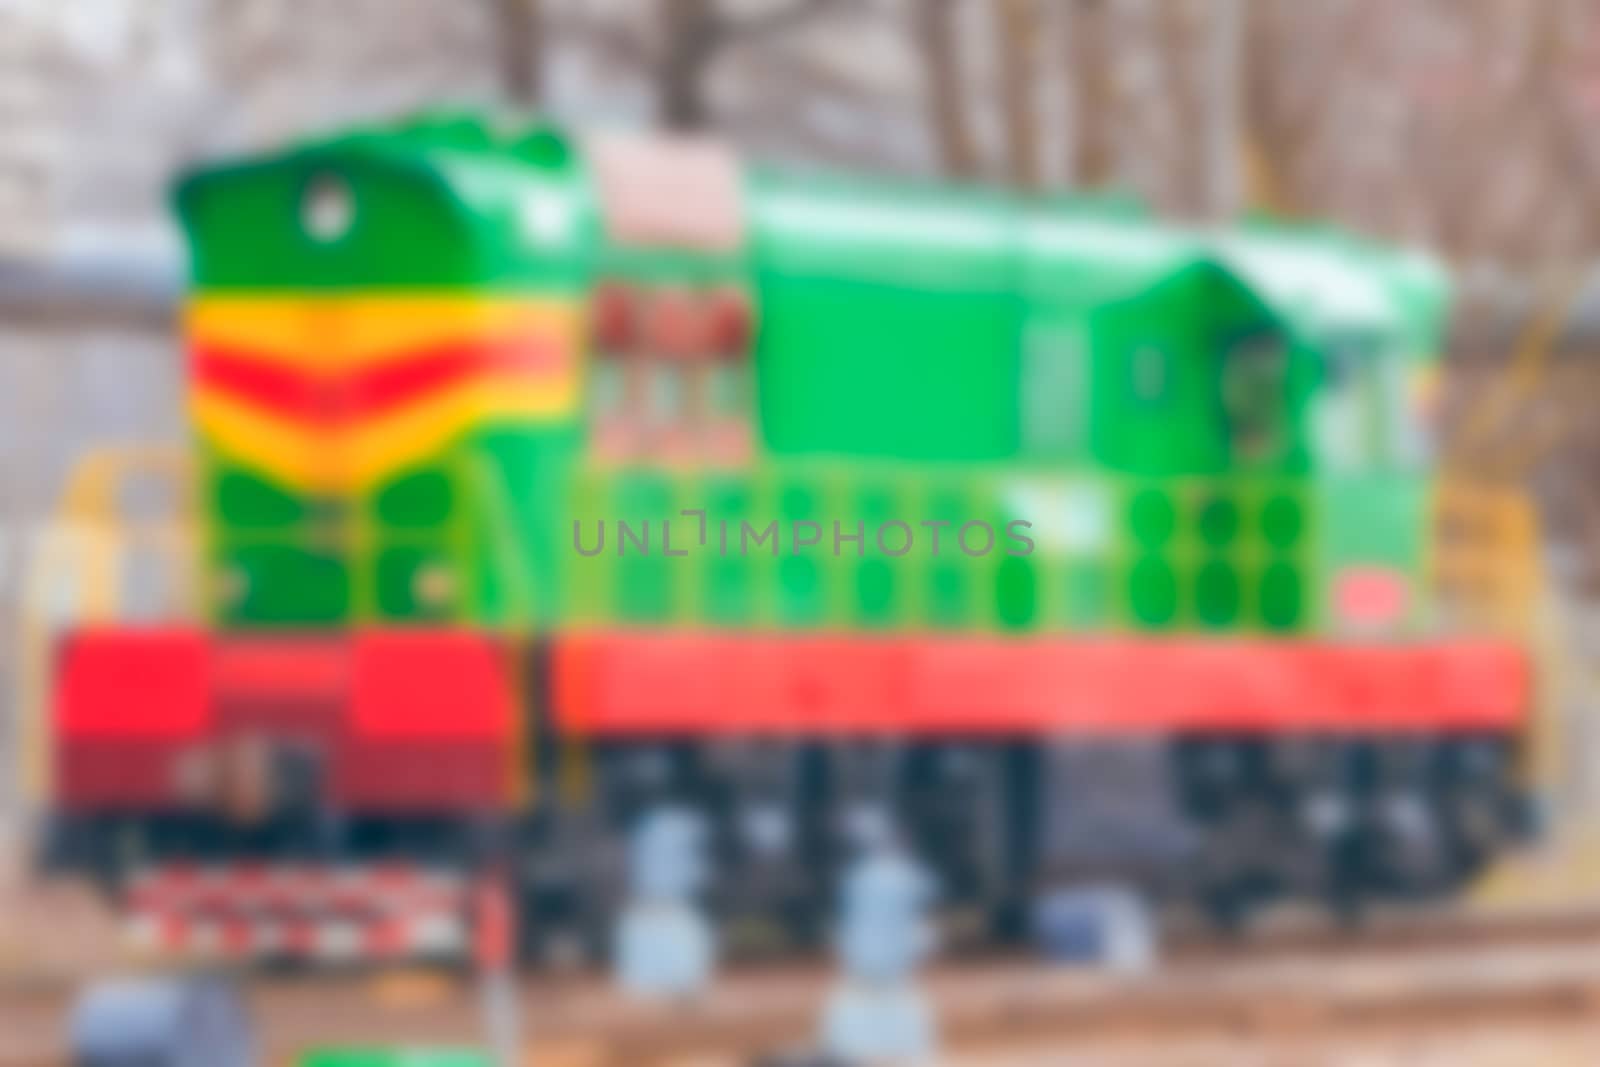 Freight train - soft lens bokeh image. Defocused background